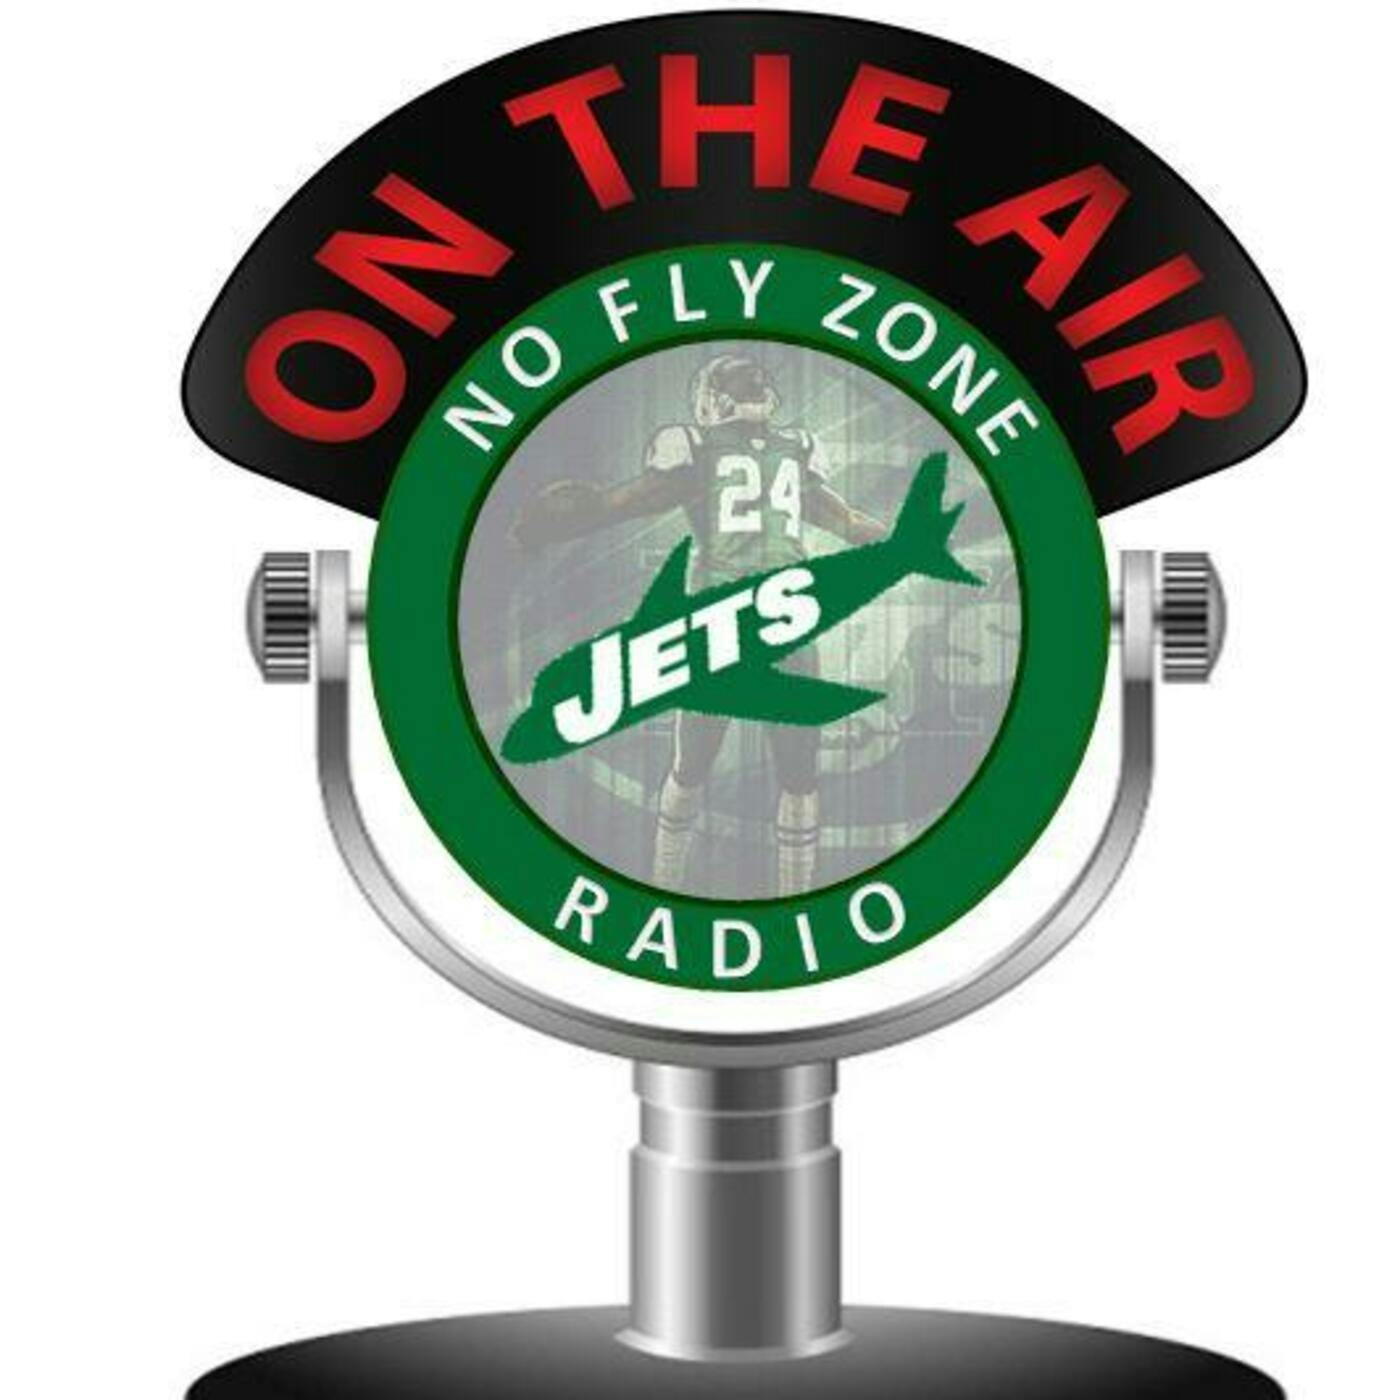 Episode 171: No Fly Zone Radio Episode 171